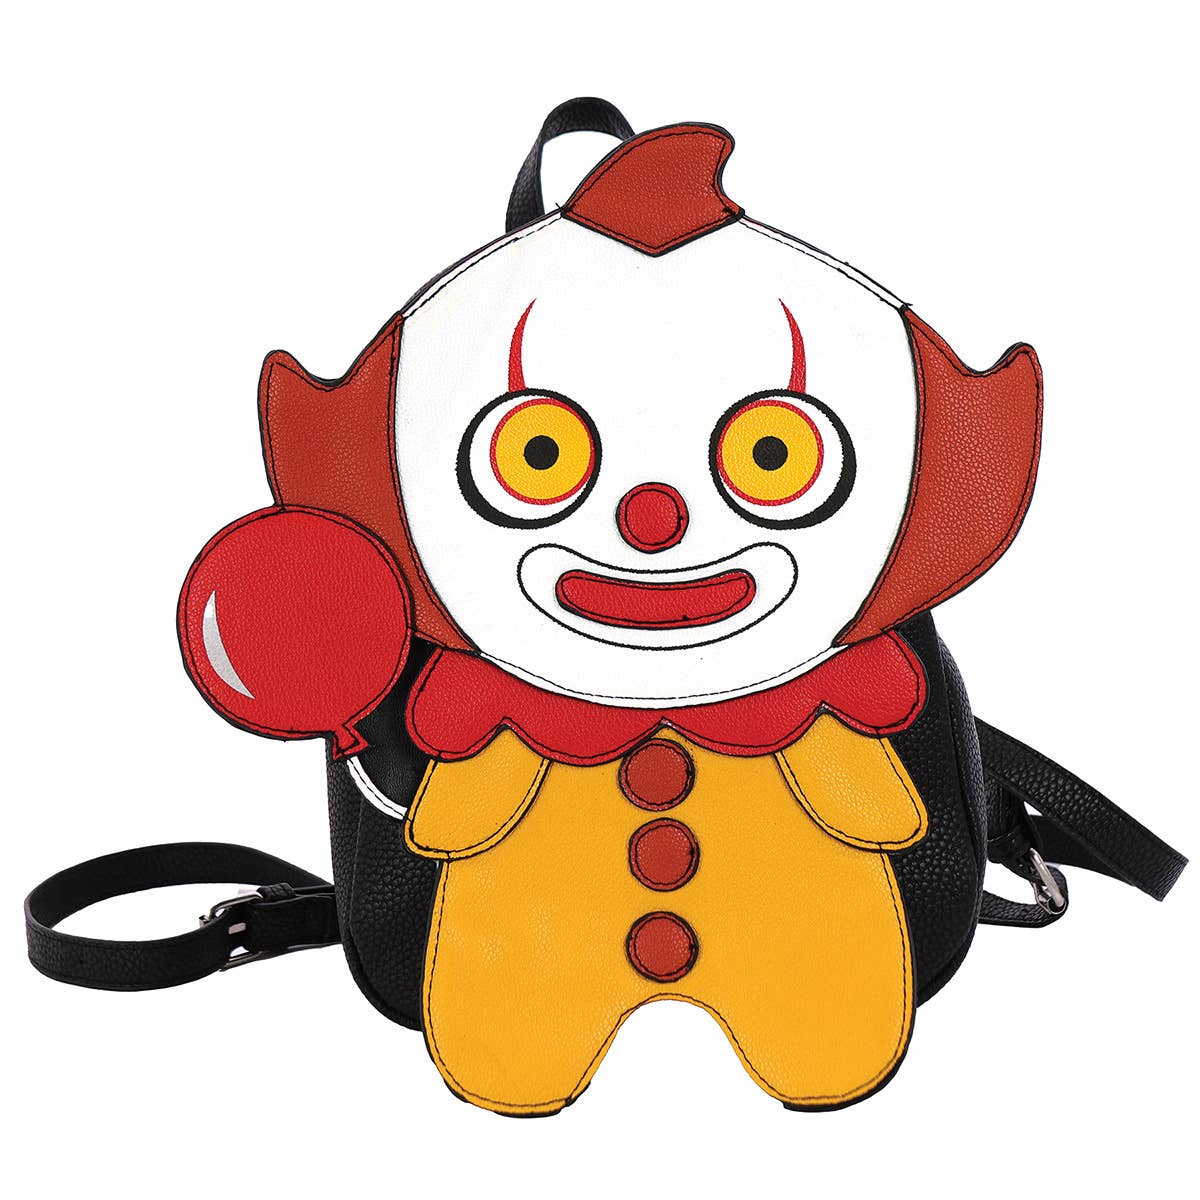 Cute Scary It the Clown Mini Backpack in Vinyl